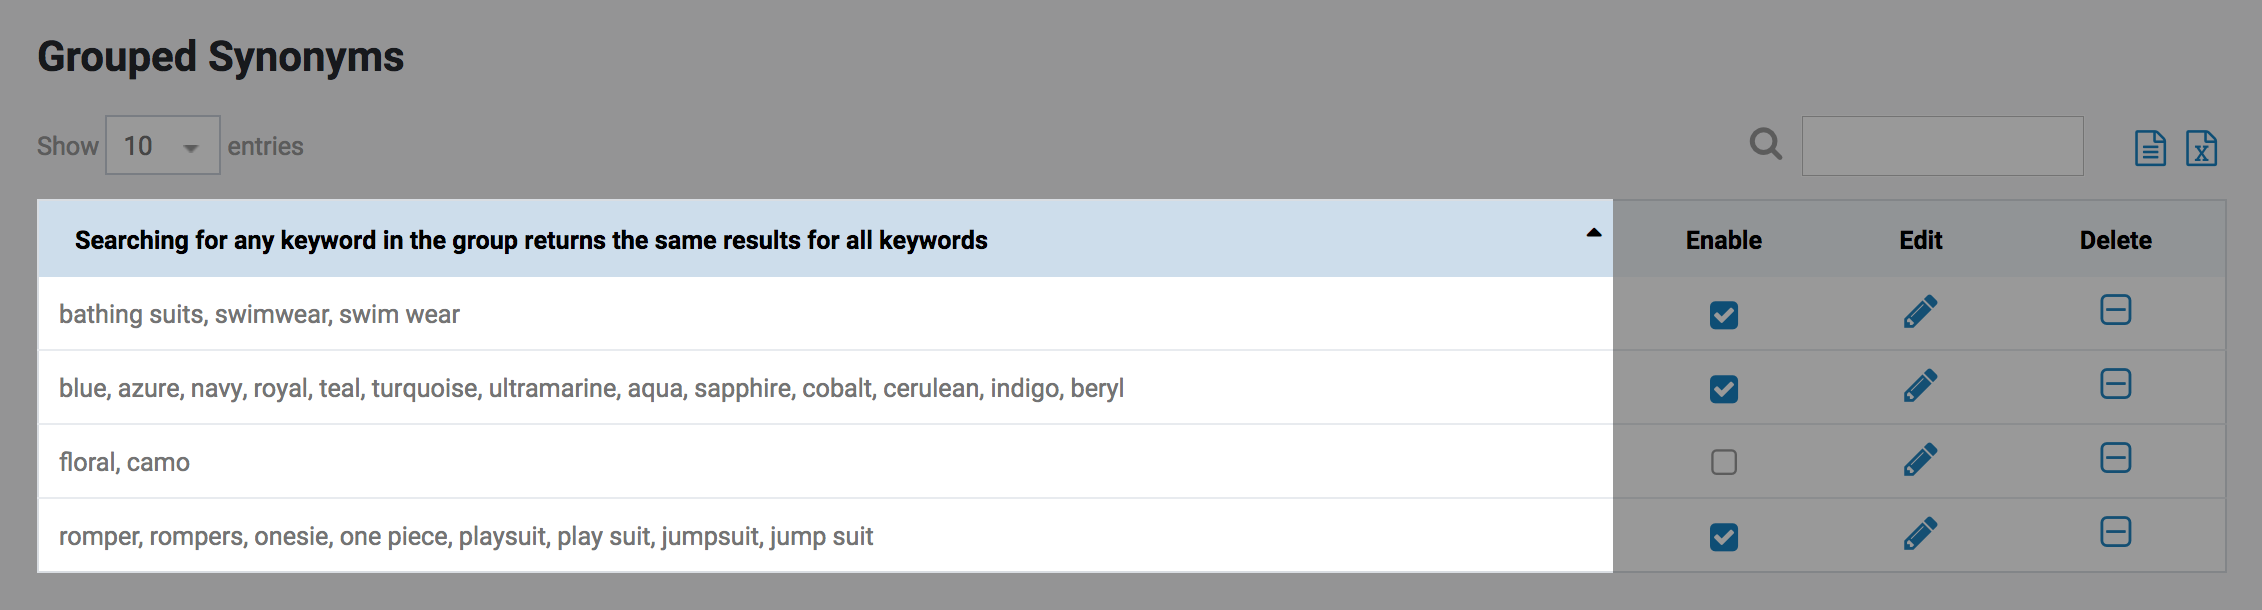 Synonyms Searchspring Help Desk